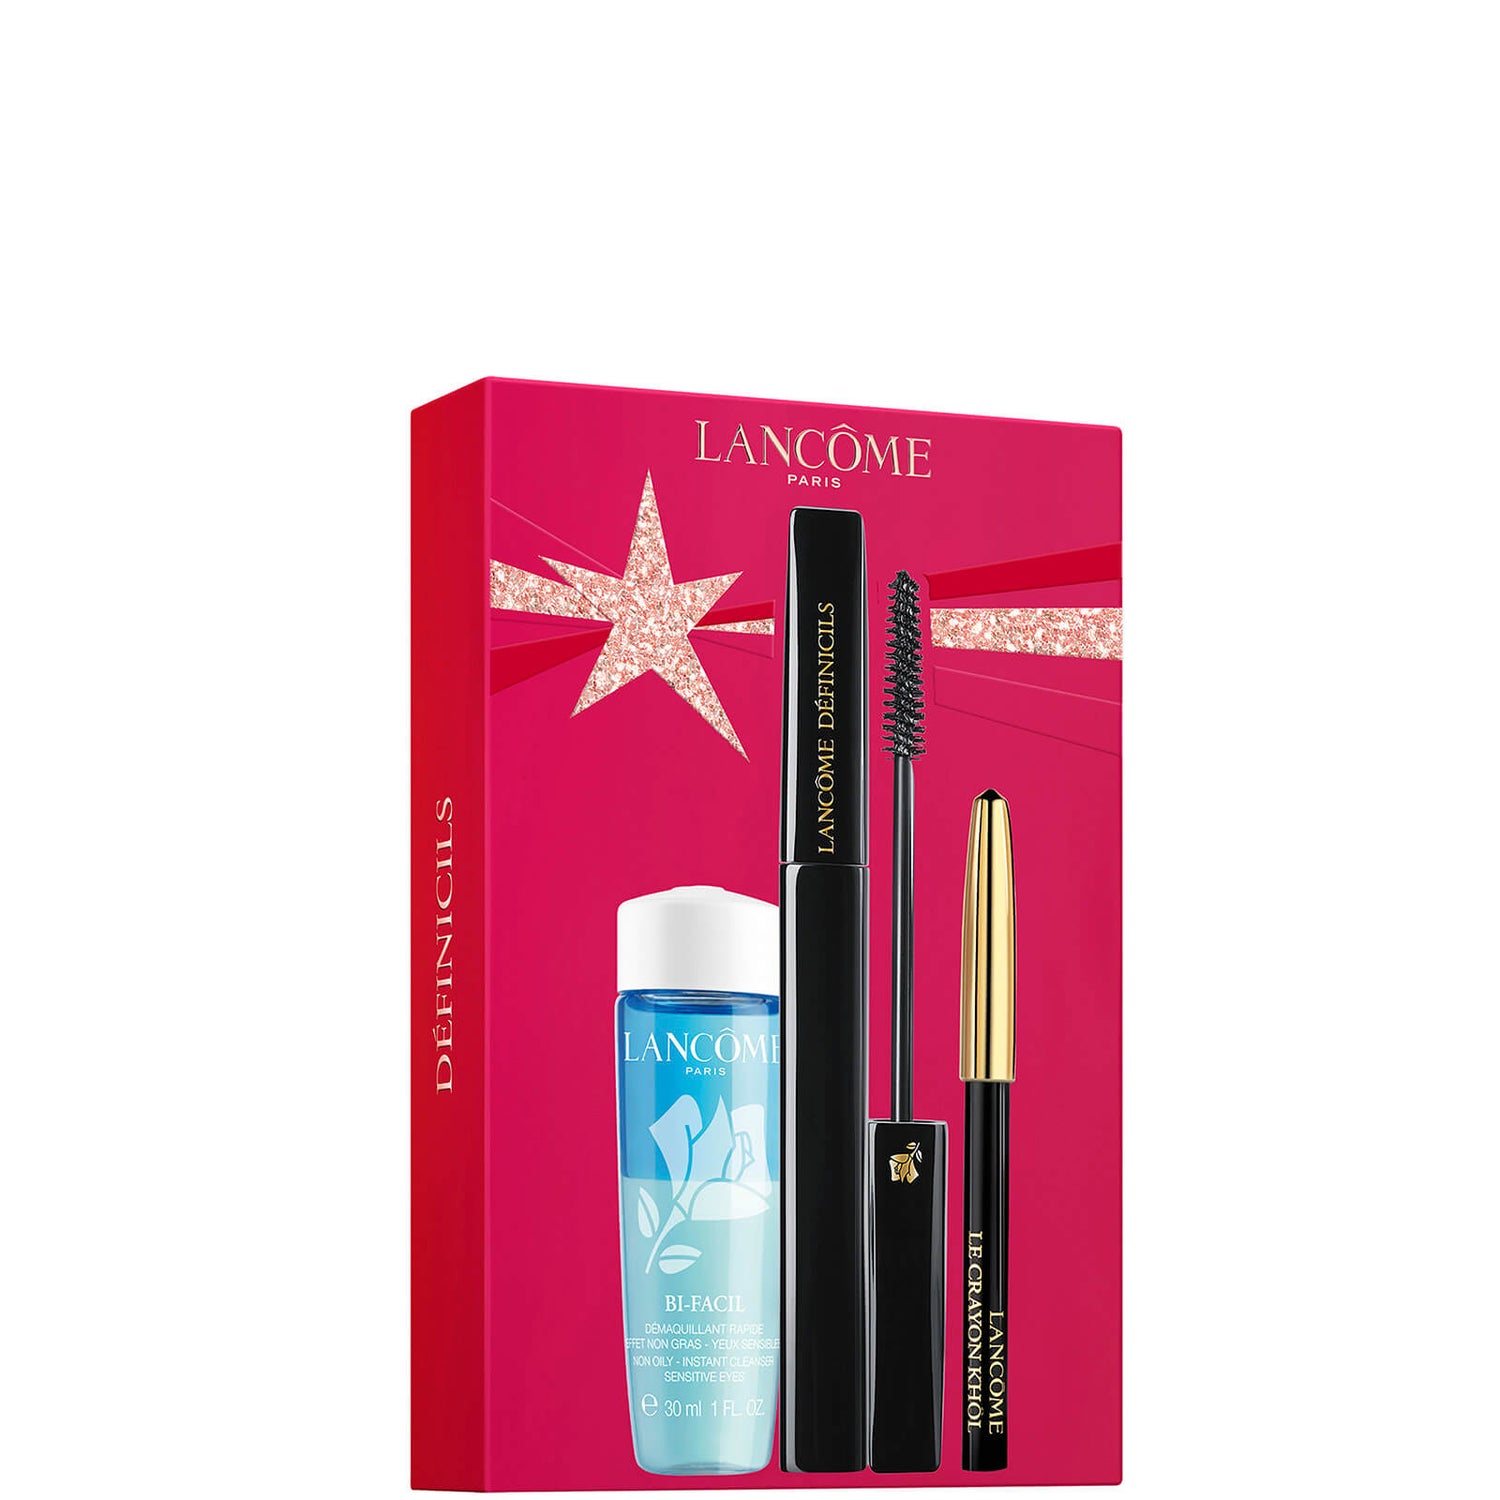 Lancôme Definicils Mascara Christmas Gift Set (Worth £42.00)